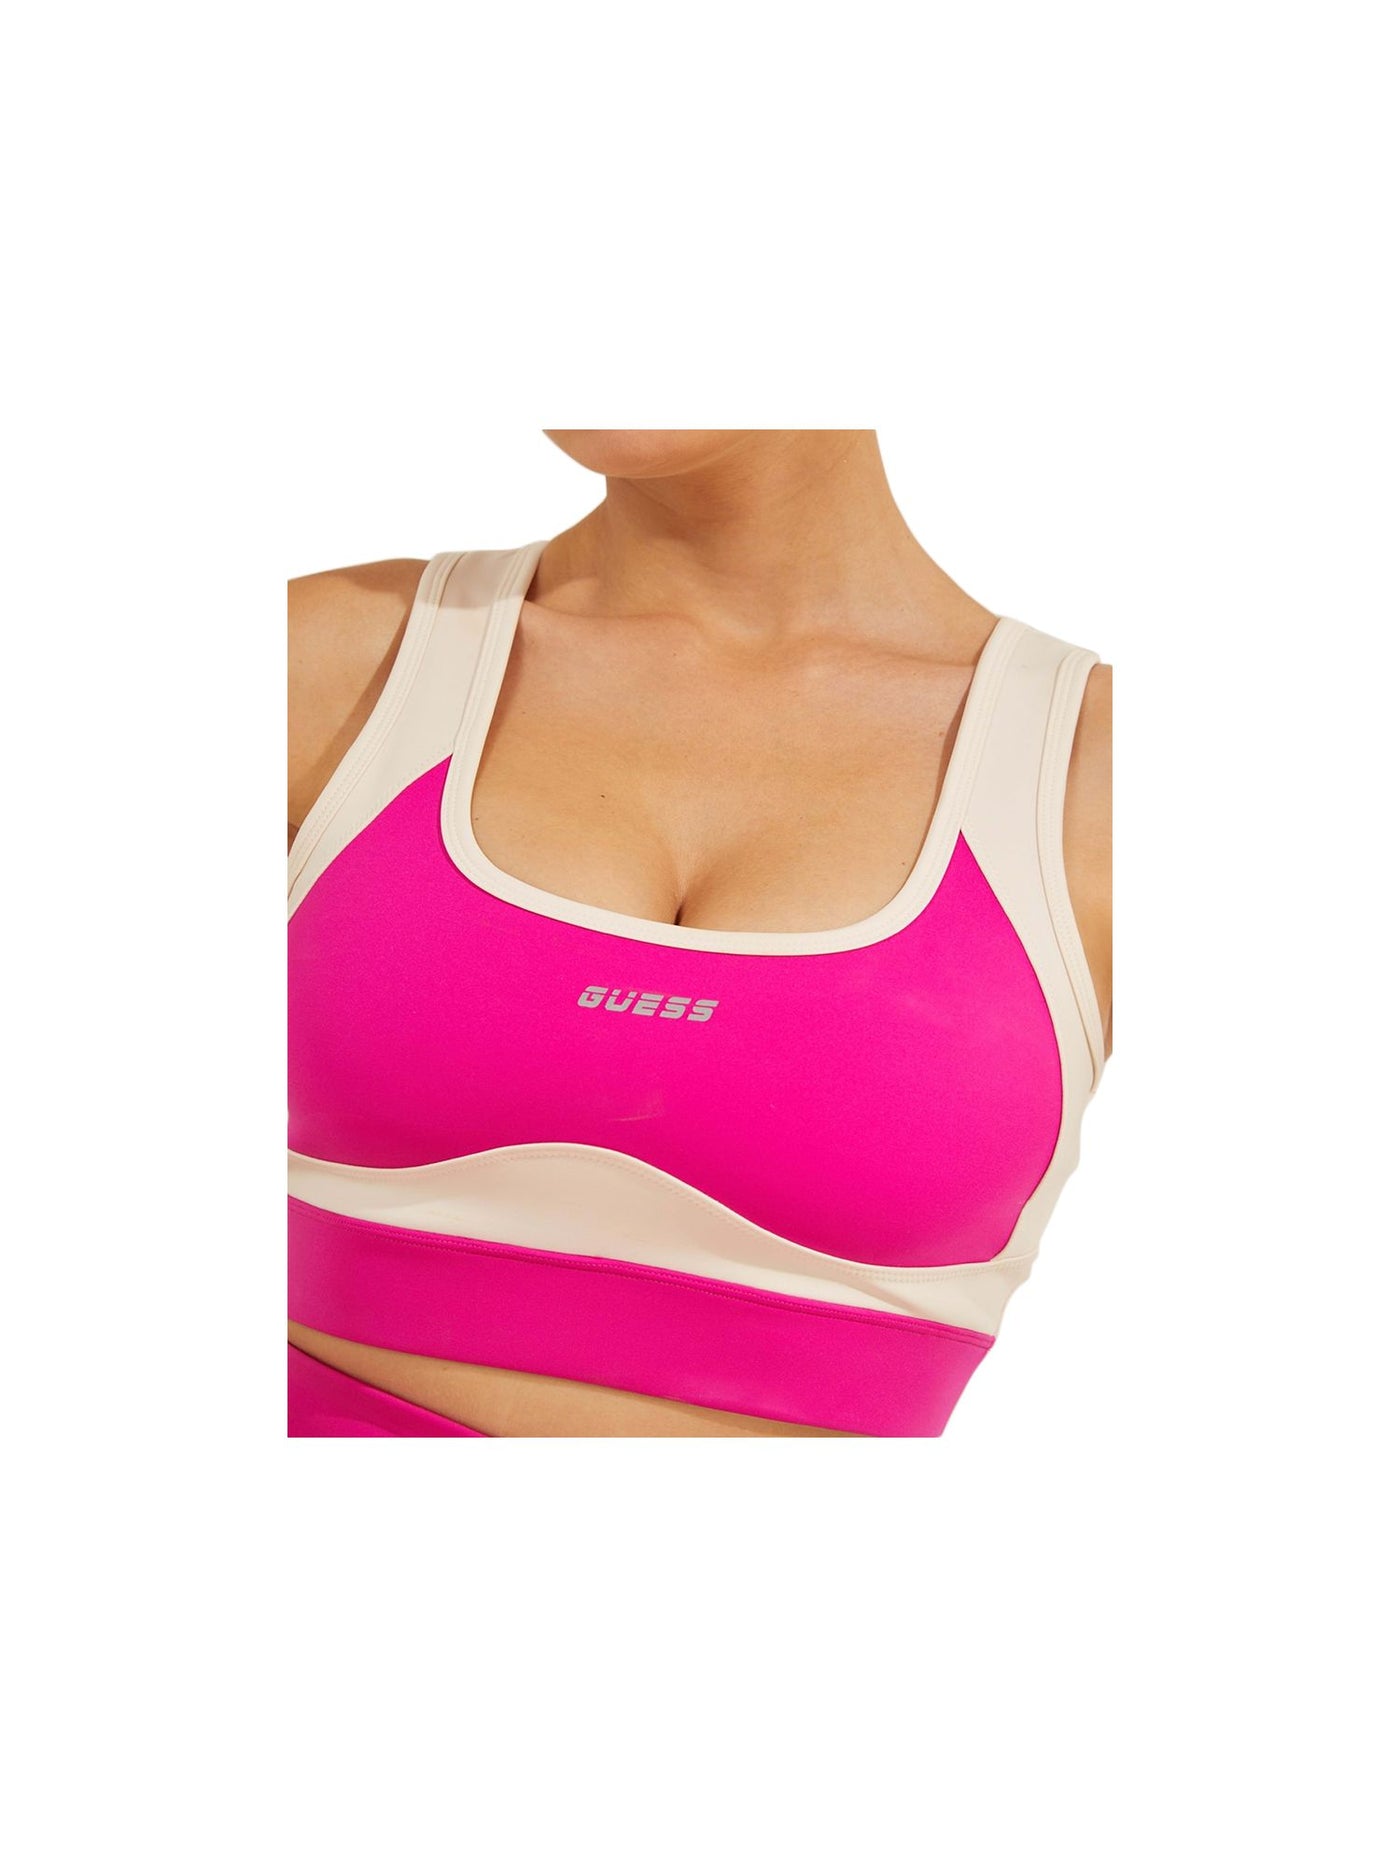 GUESS Intimates Pink Compression Cutouts at back Square neckline Sports Bra L